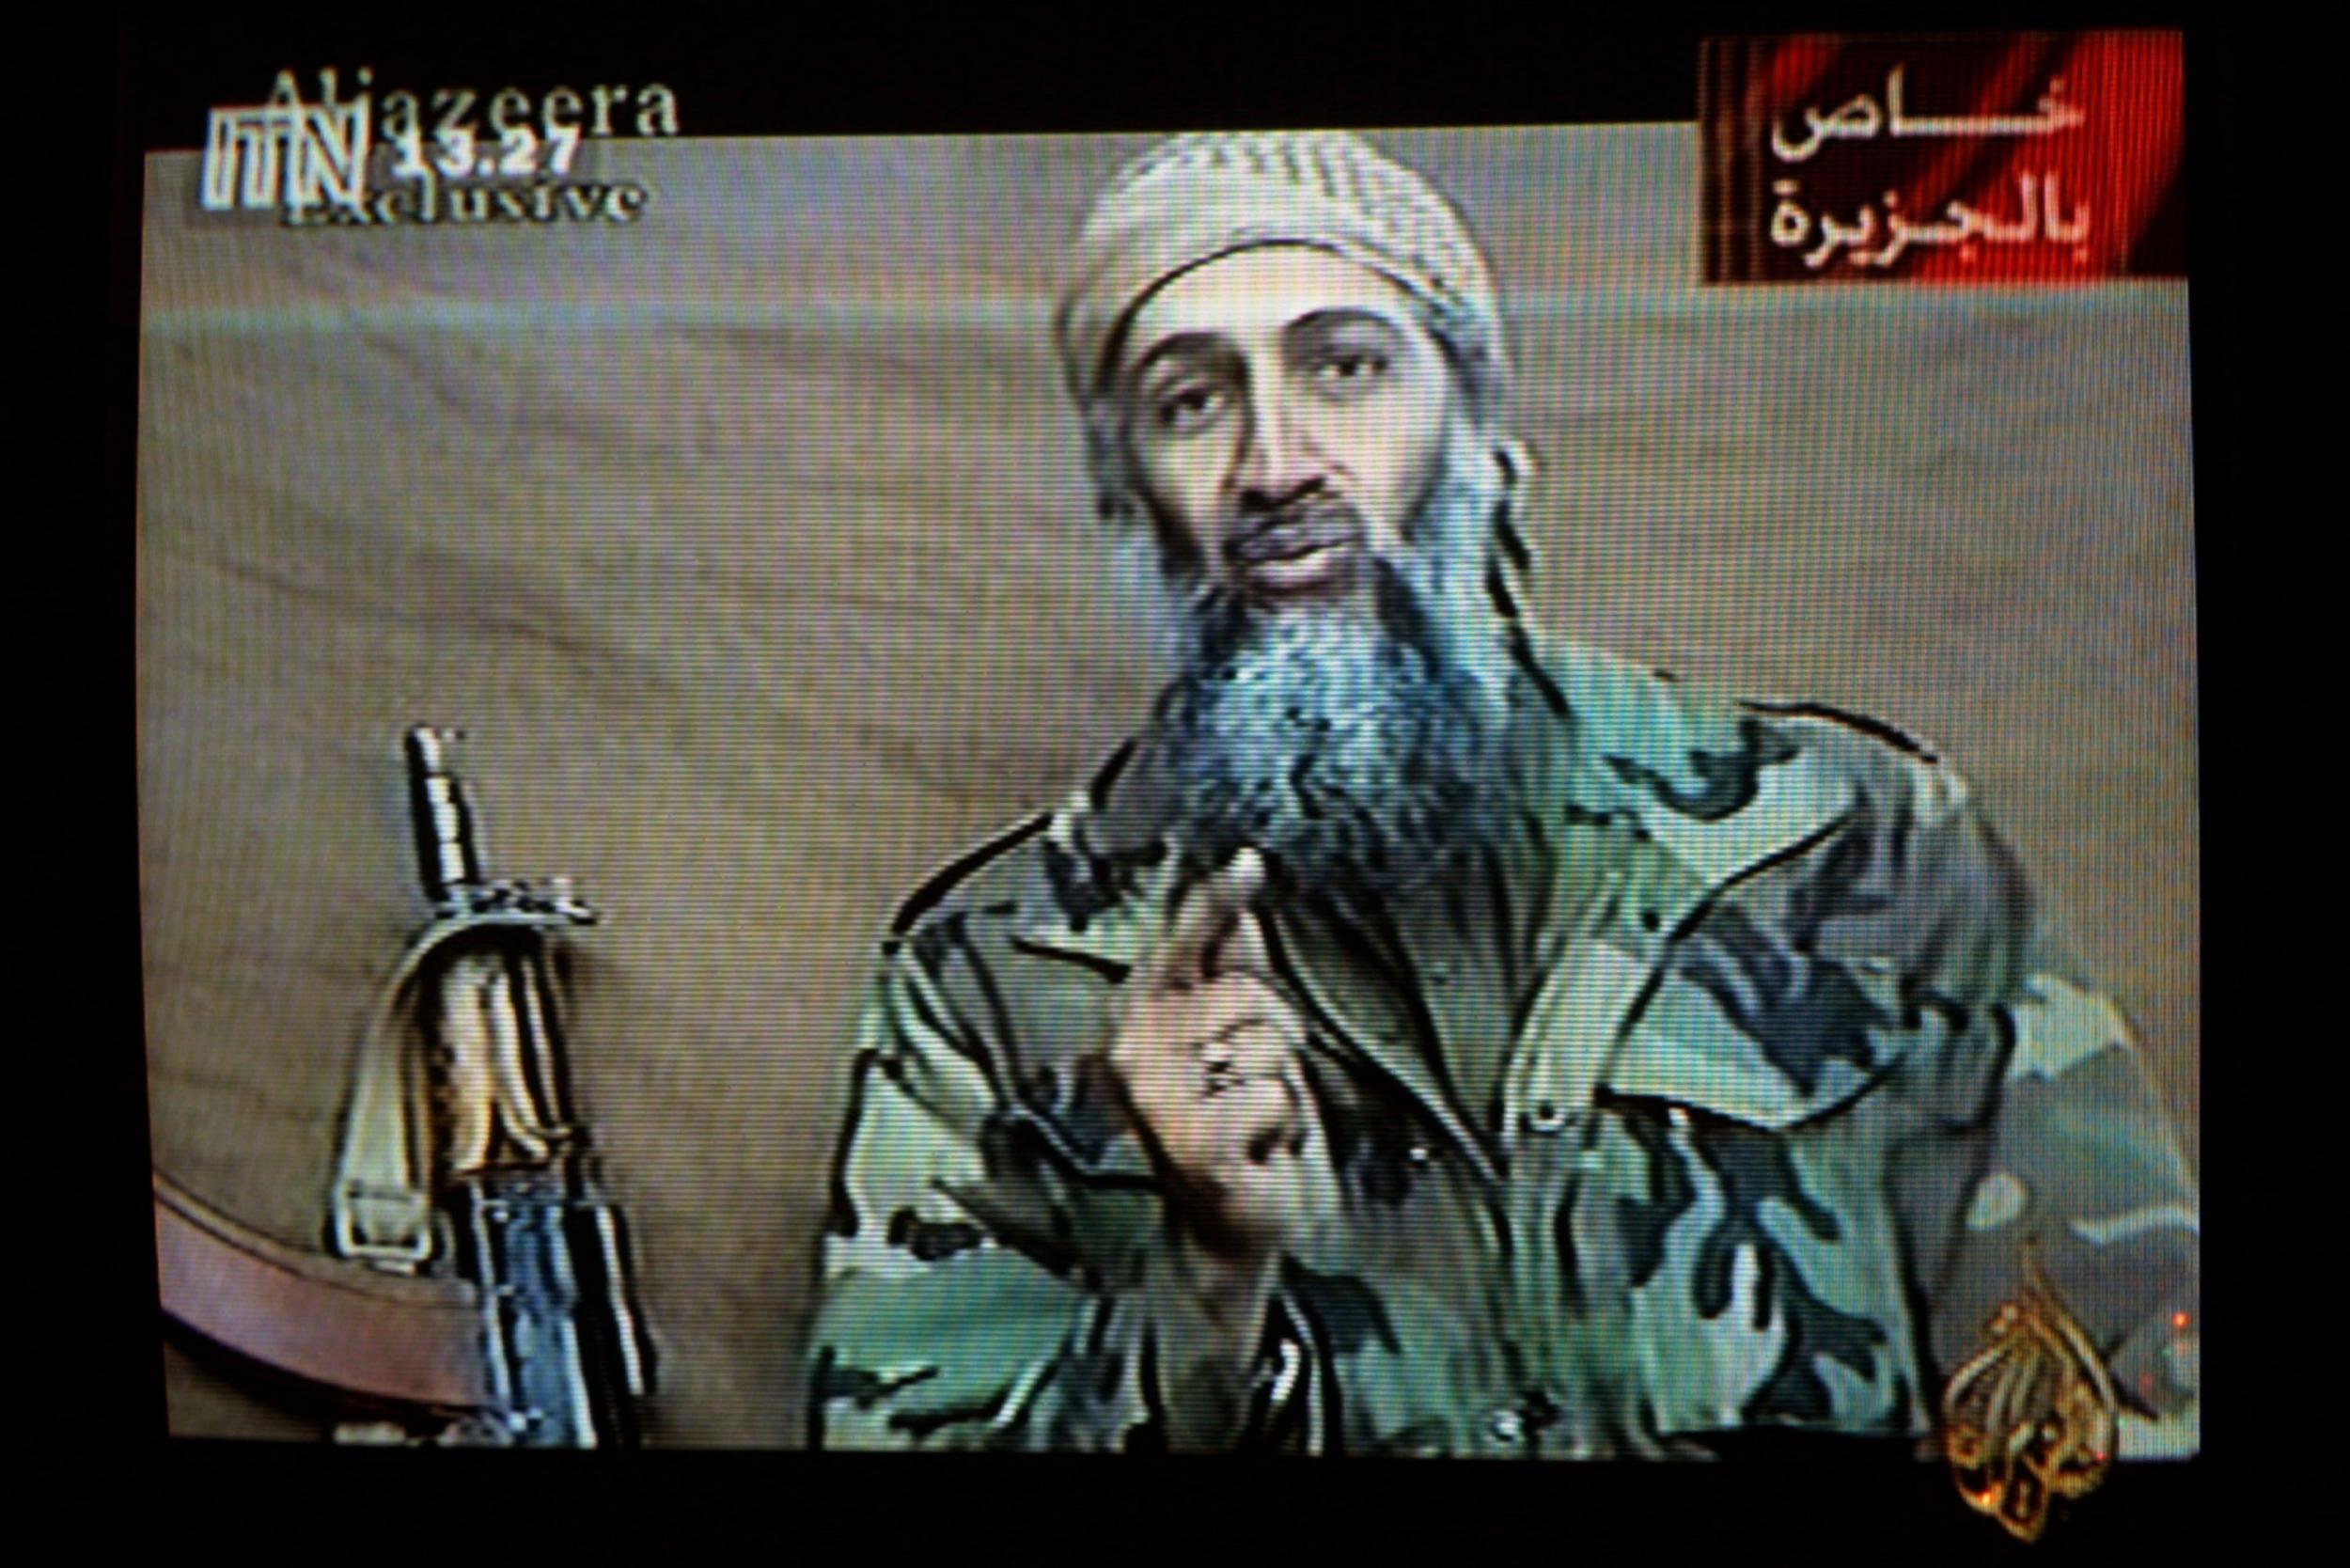 A videotape released by Al-Jazeera TV featuring Osama bin Laden is broadcast in Britain December 27, 2001